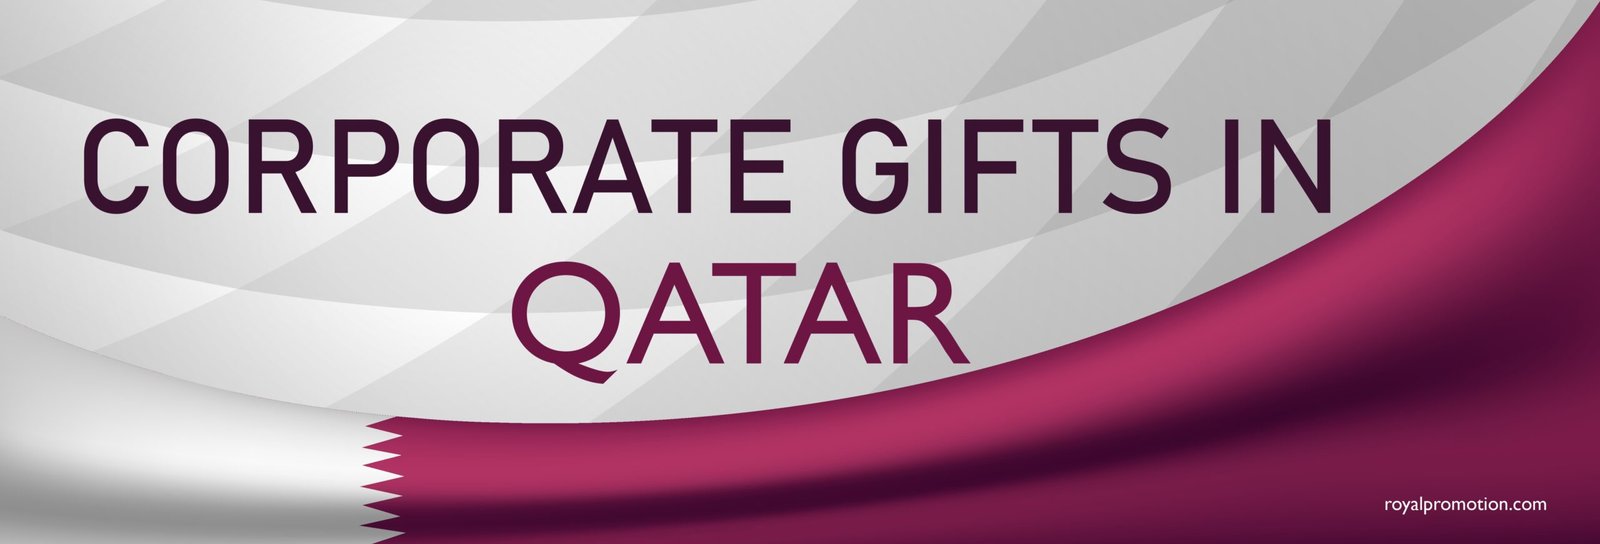 corporate gifts qatar